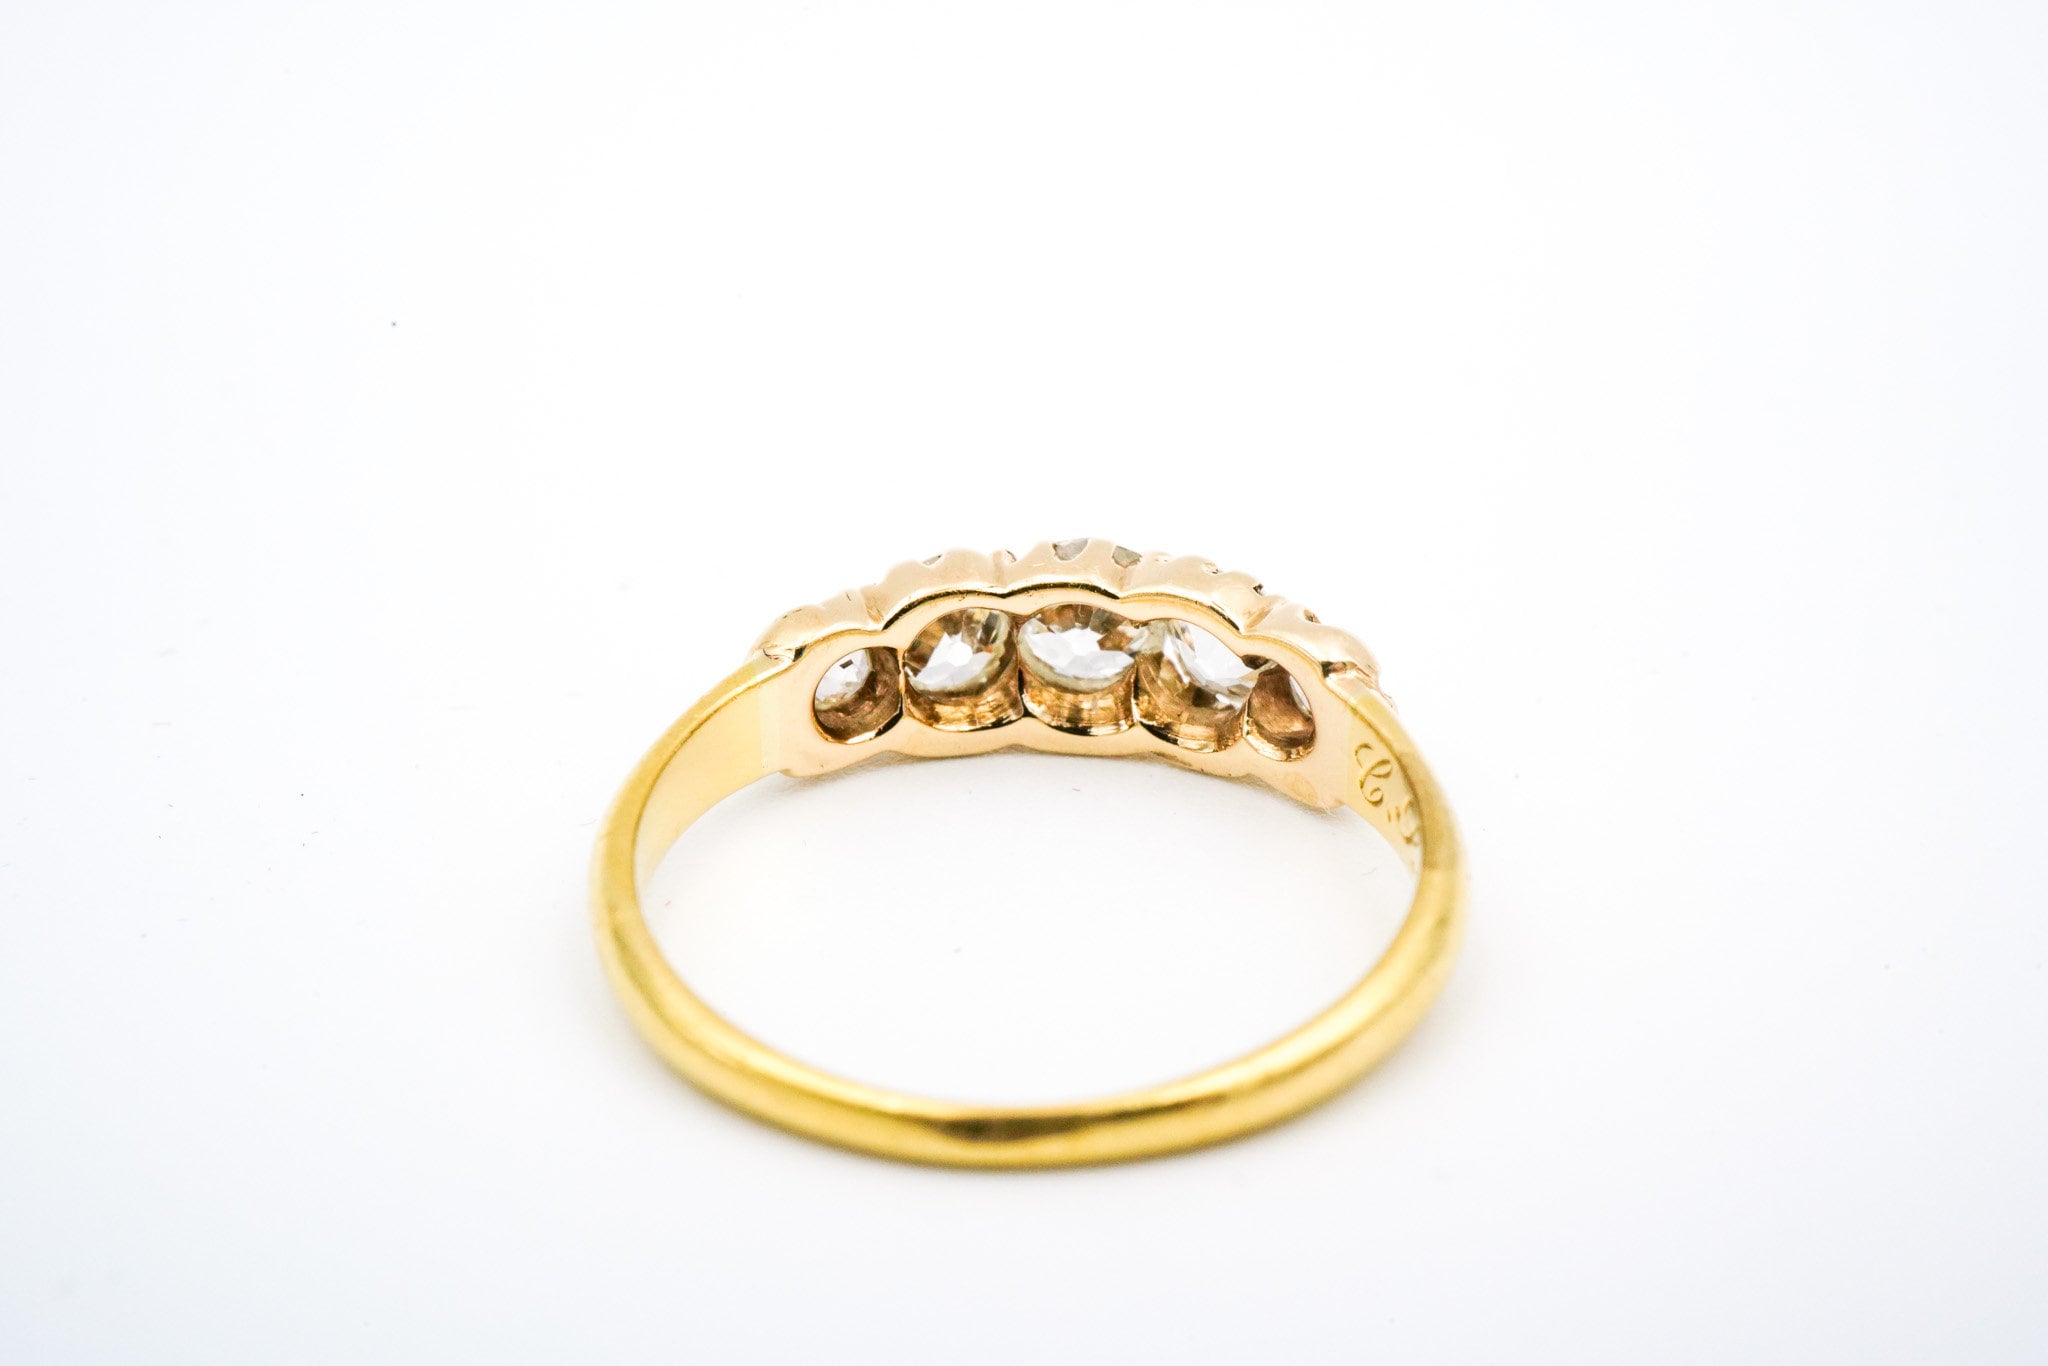 Victorian 14K Yellow Gold & Old Mine Cut Diamond Ring - Size 5 1/4